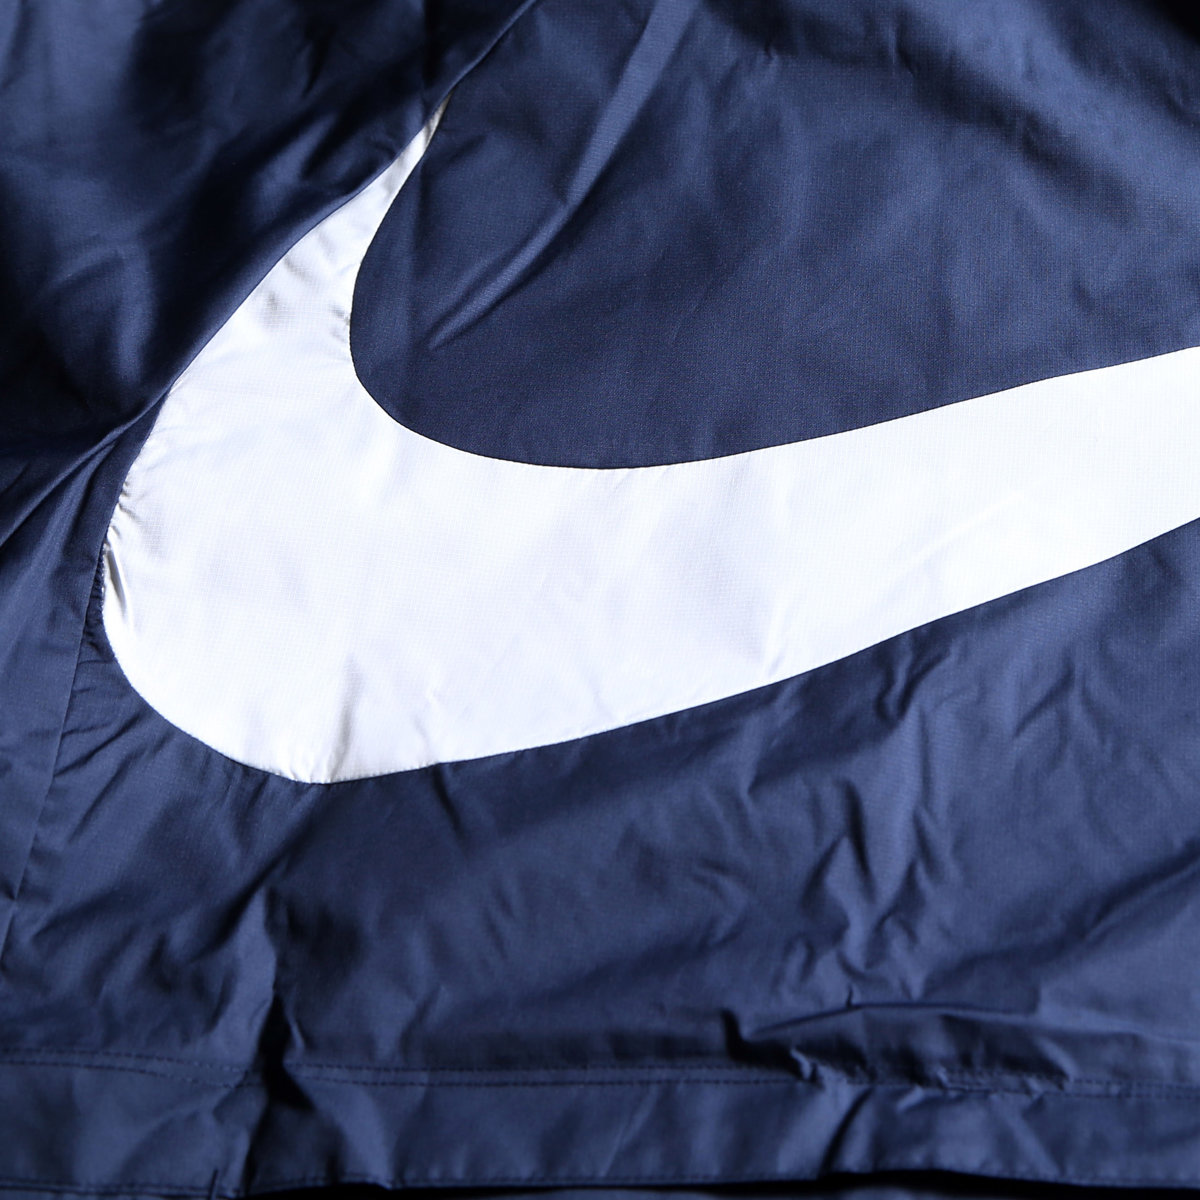 Buy the 21-22 Nike Rain Jacket online at Sunderland AFC Store